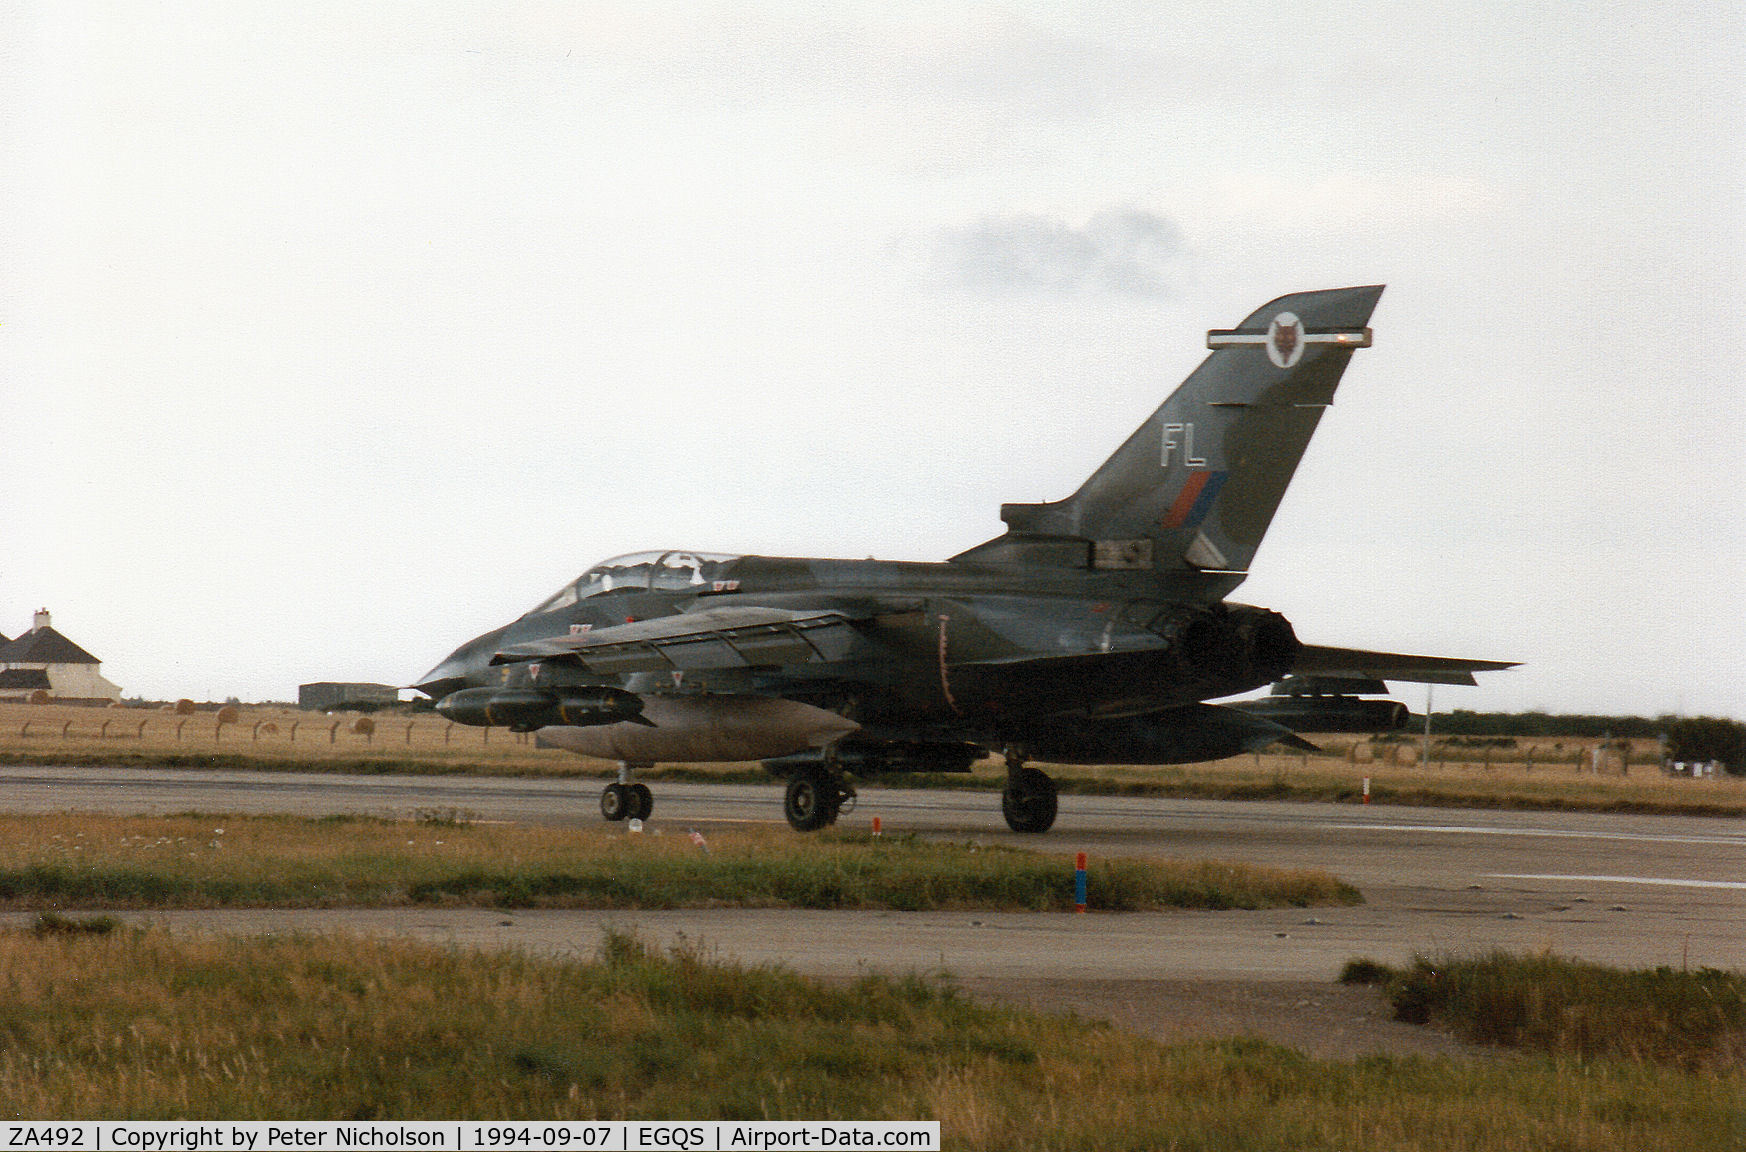 ZA492, 1983 Panavia Tornado GR.1B C/N 310/BS108/3144, Tornado GR.1B, callsign Saxon 1, of 12 Squadron preparing to take-off on Runway 05 at RAF Lossiemouth in September 1994.